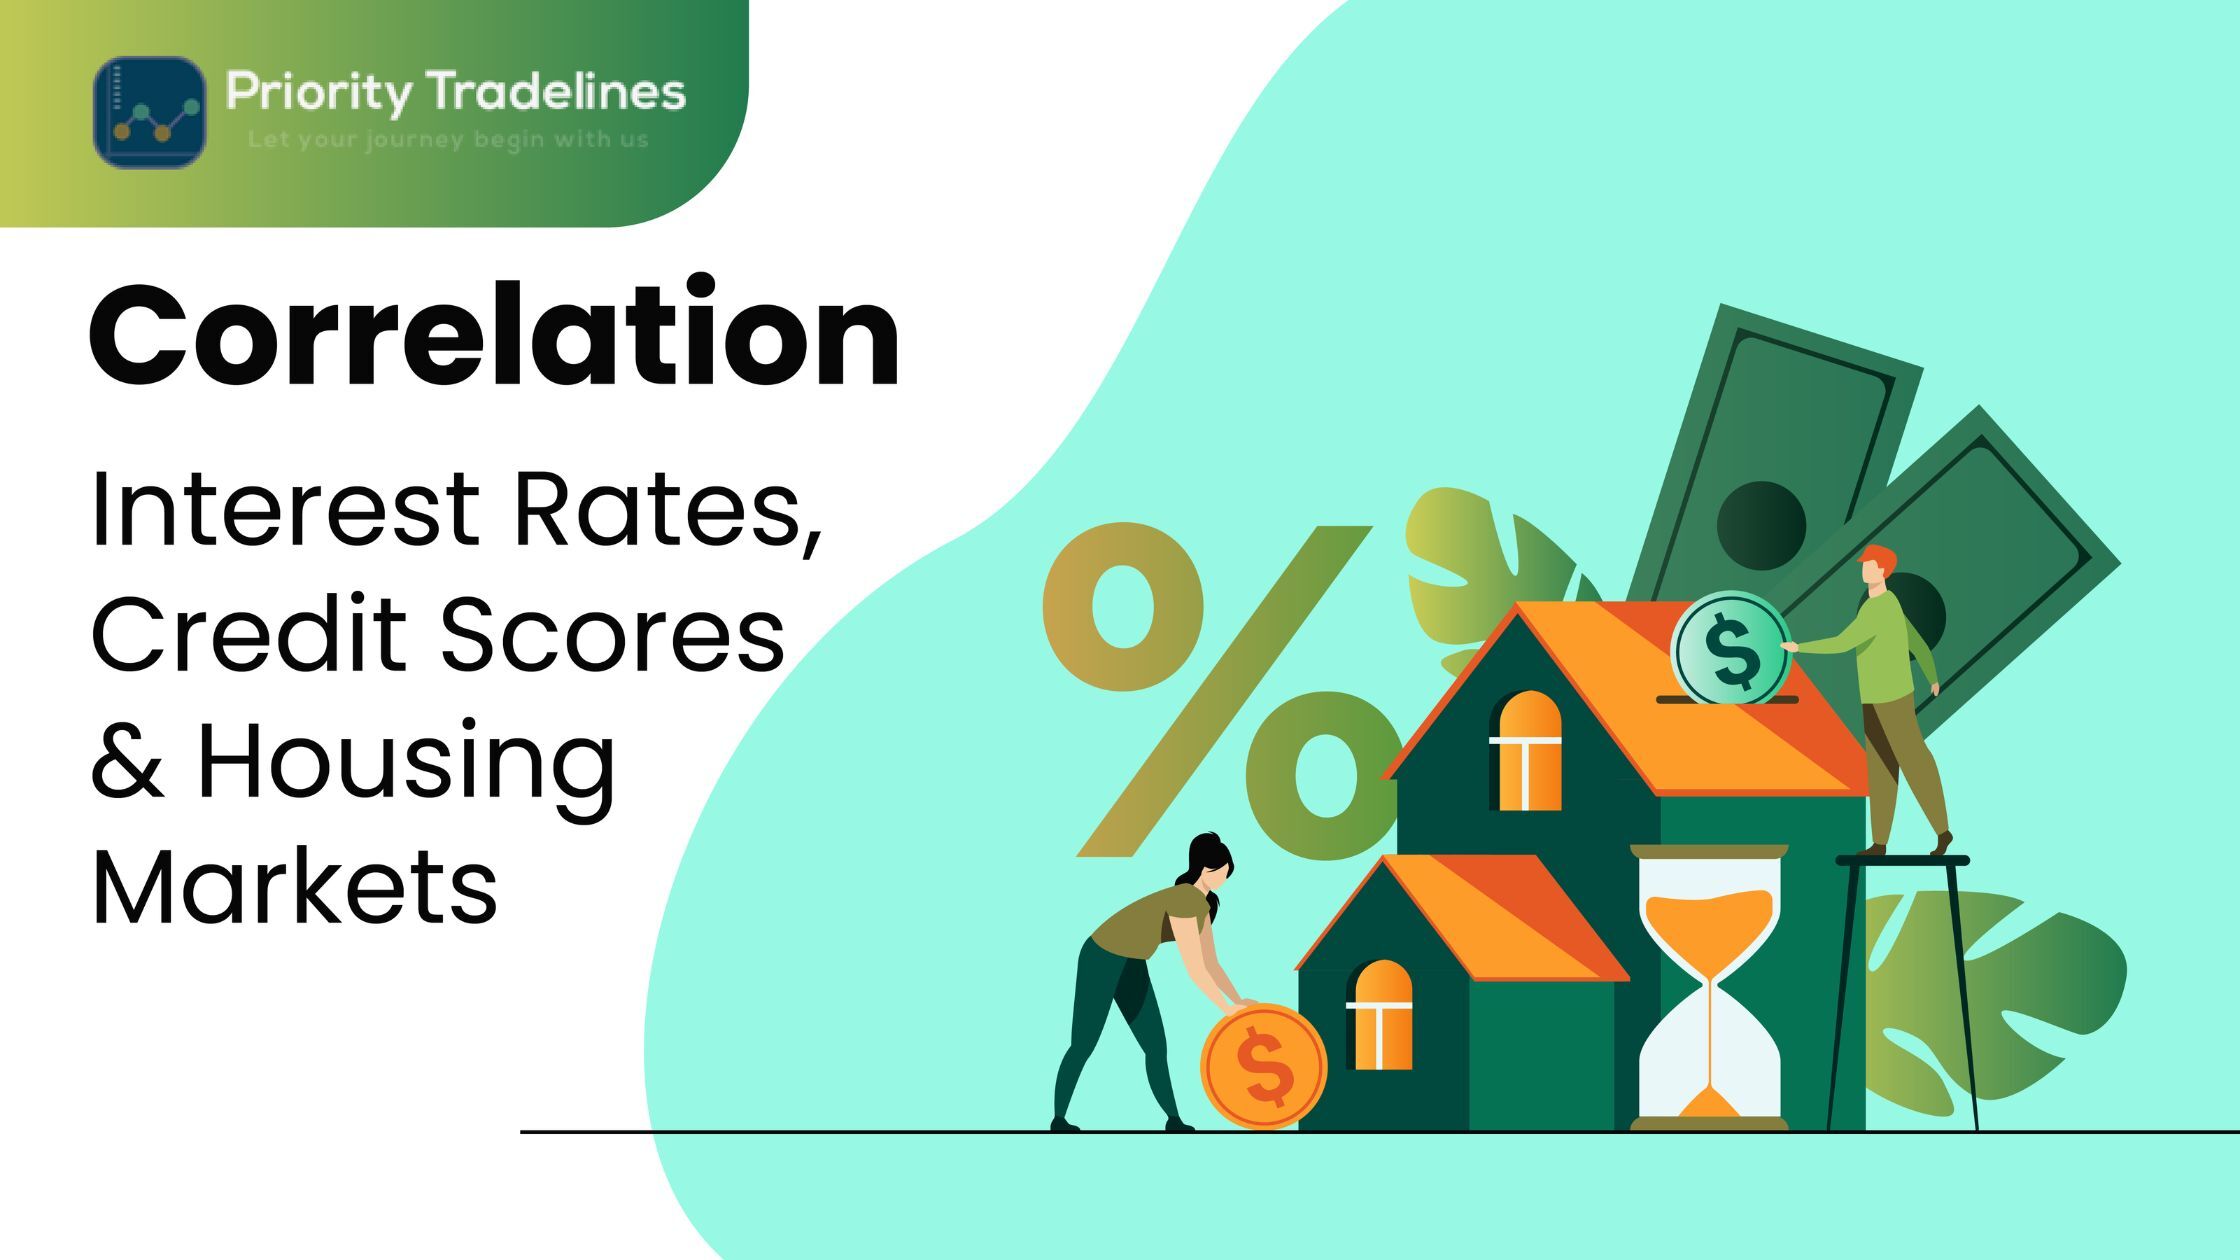 Correlation: Interest Rates, Credit Scores & Housing Markets